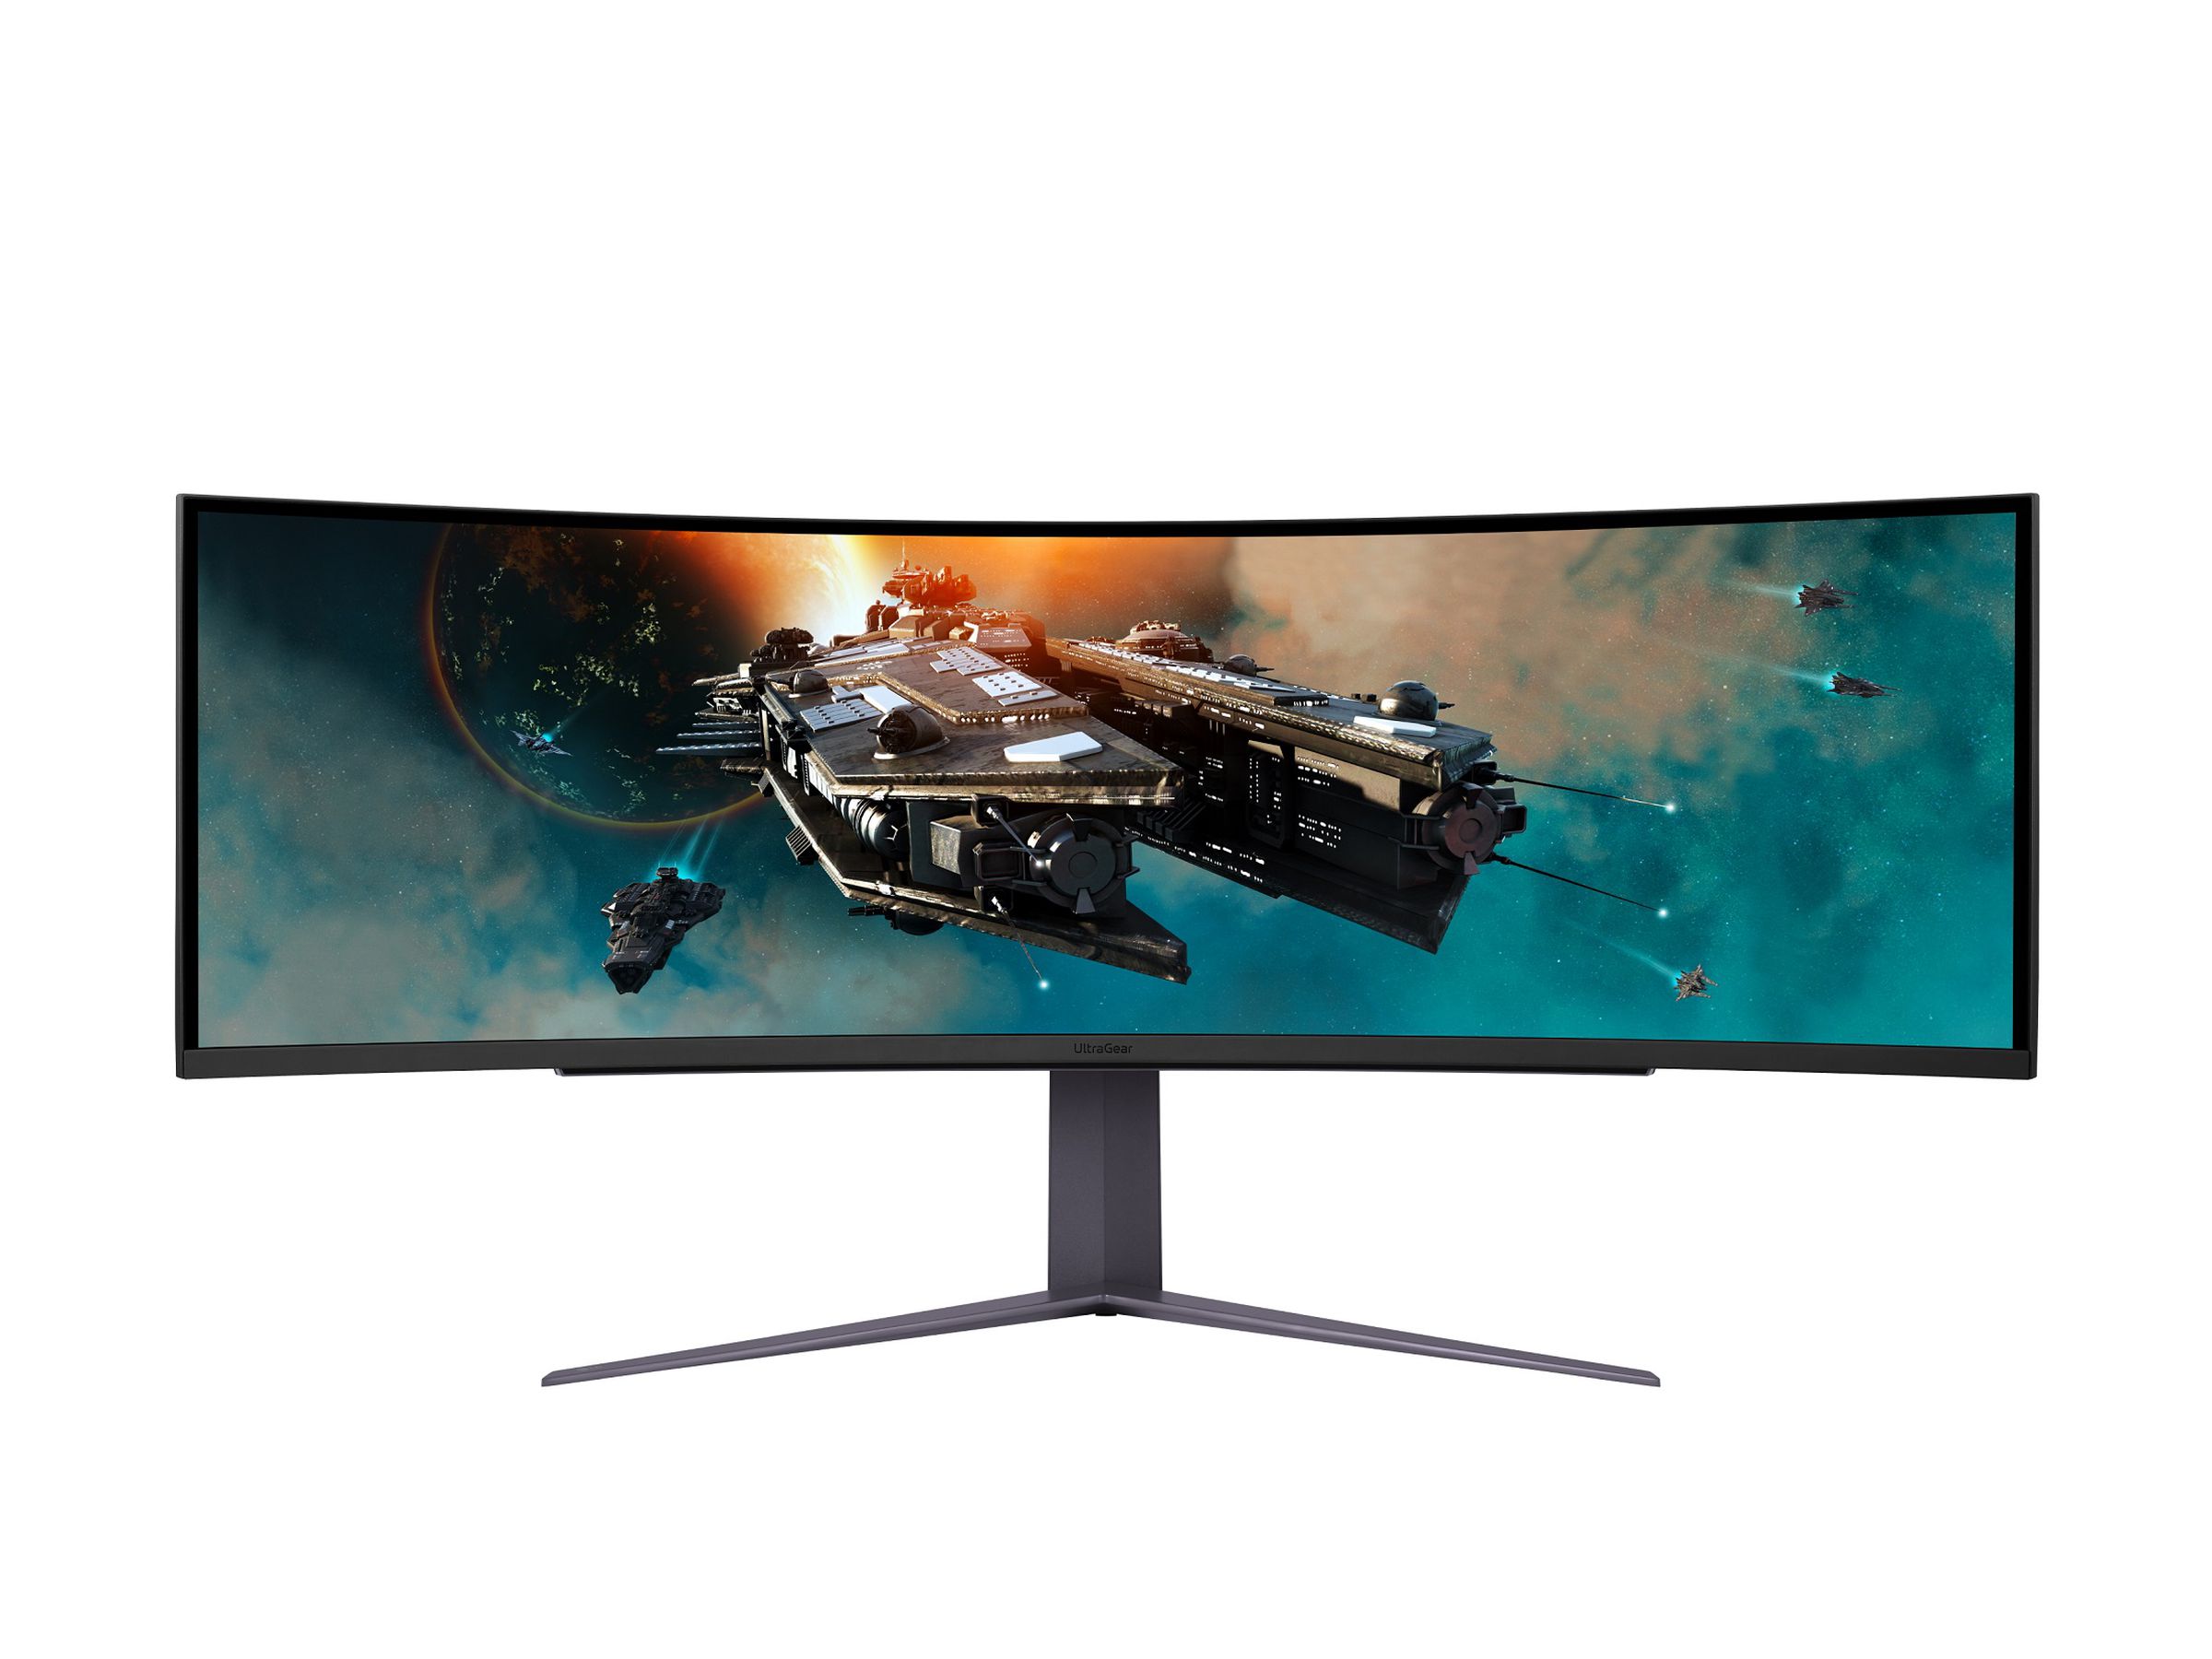 LG’s 49-inch UltraGear gaming monitor.